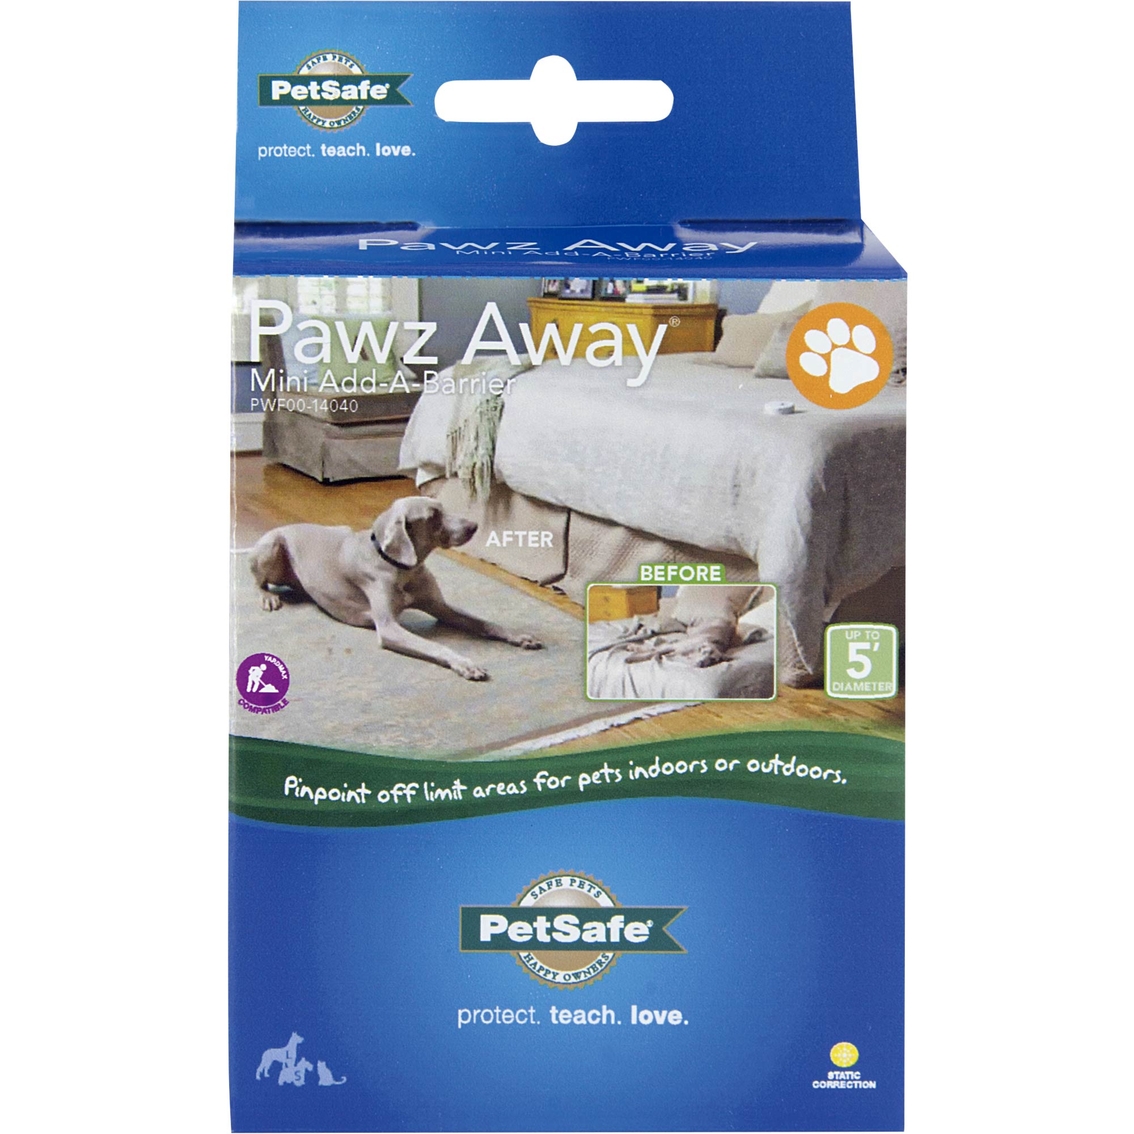 PetSafe Pawz Away Mini Add-a-Barrier - Image 1 of 2